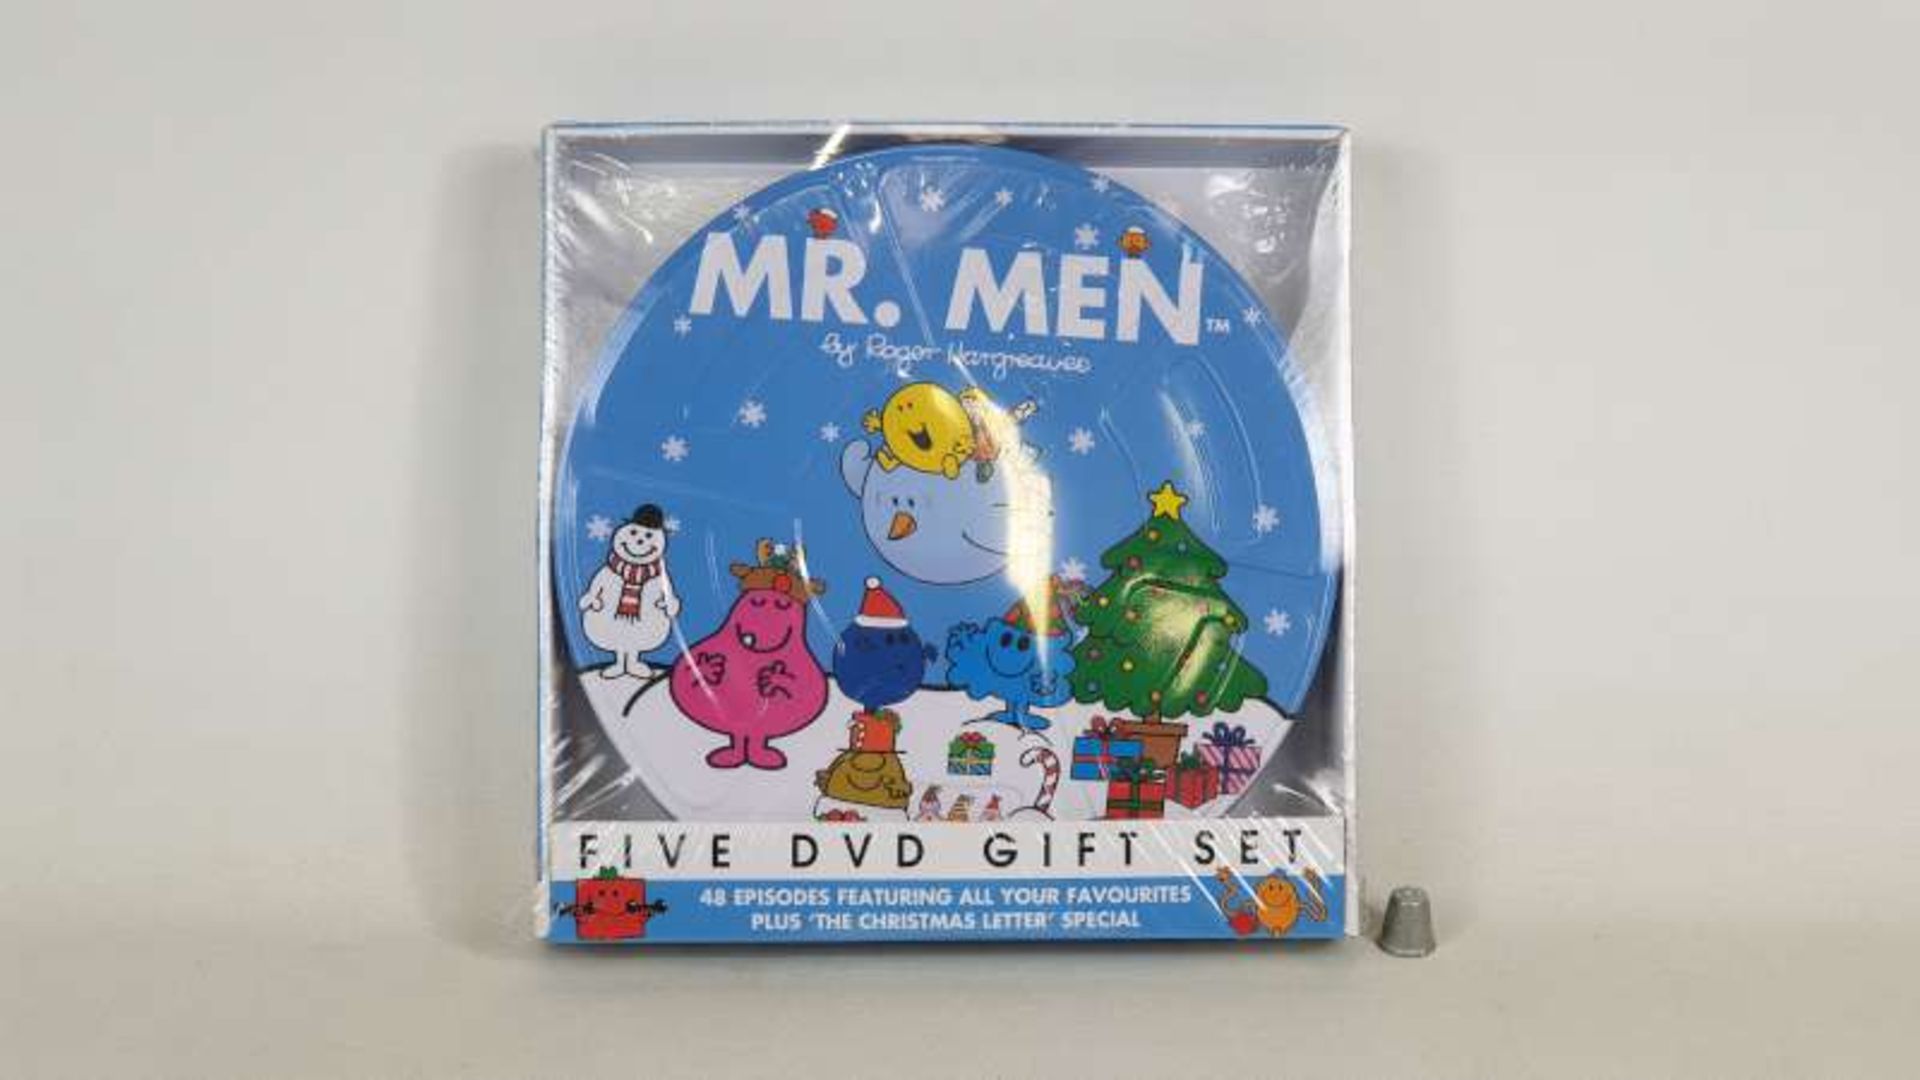 20 X BRAND NEW MR MEN FIVE DVD GIFT SETS IN 1 BOX